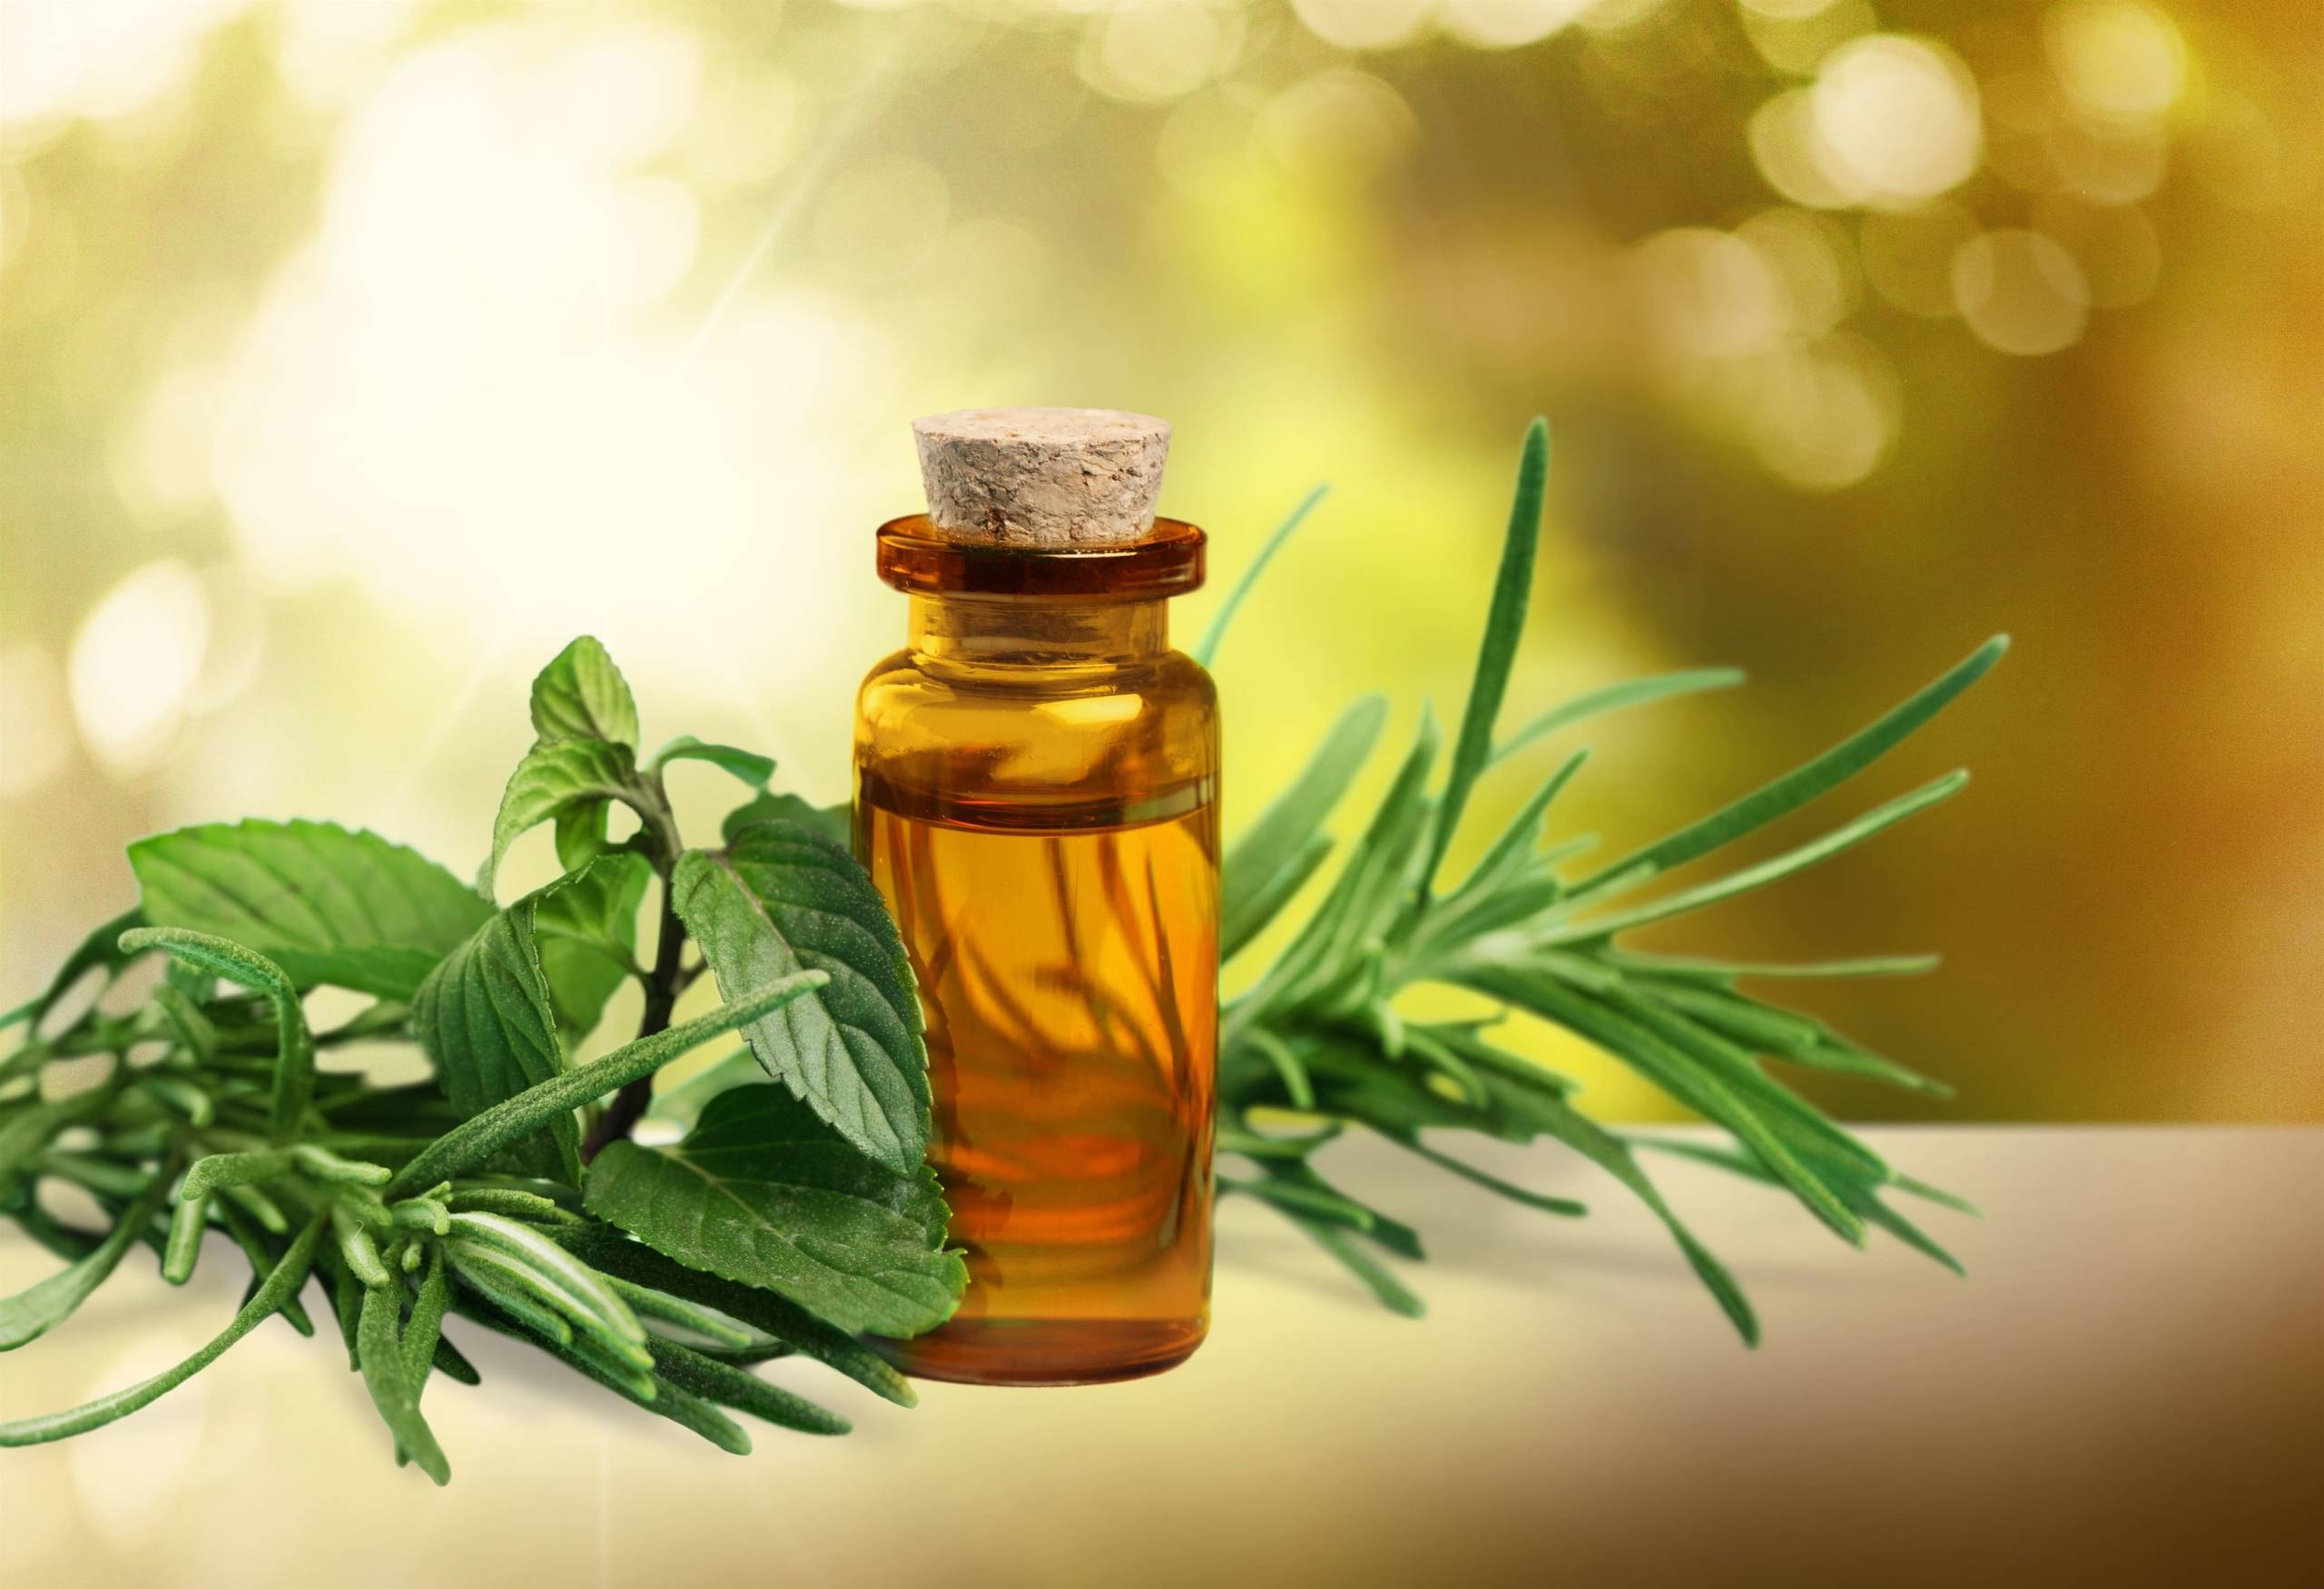 the bath essence - essential oil - tea tree oil